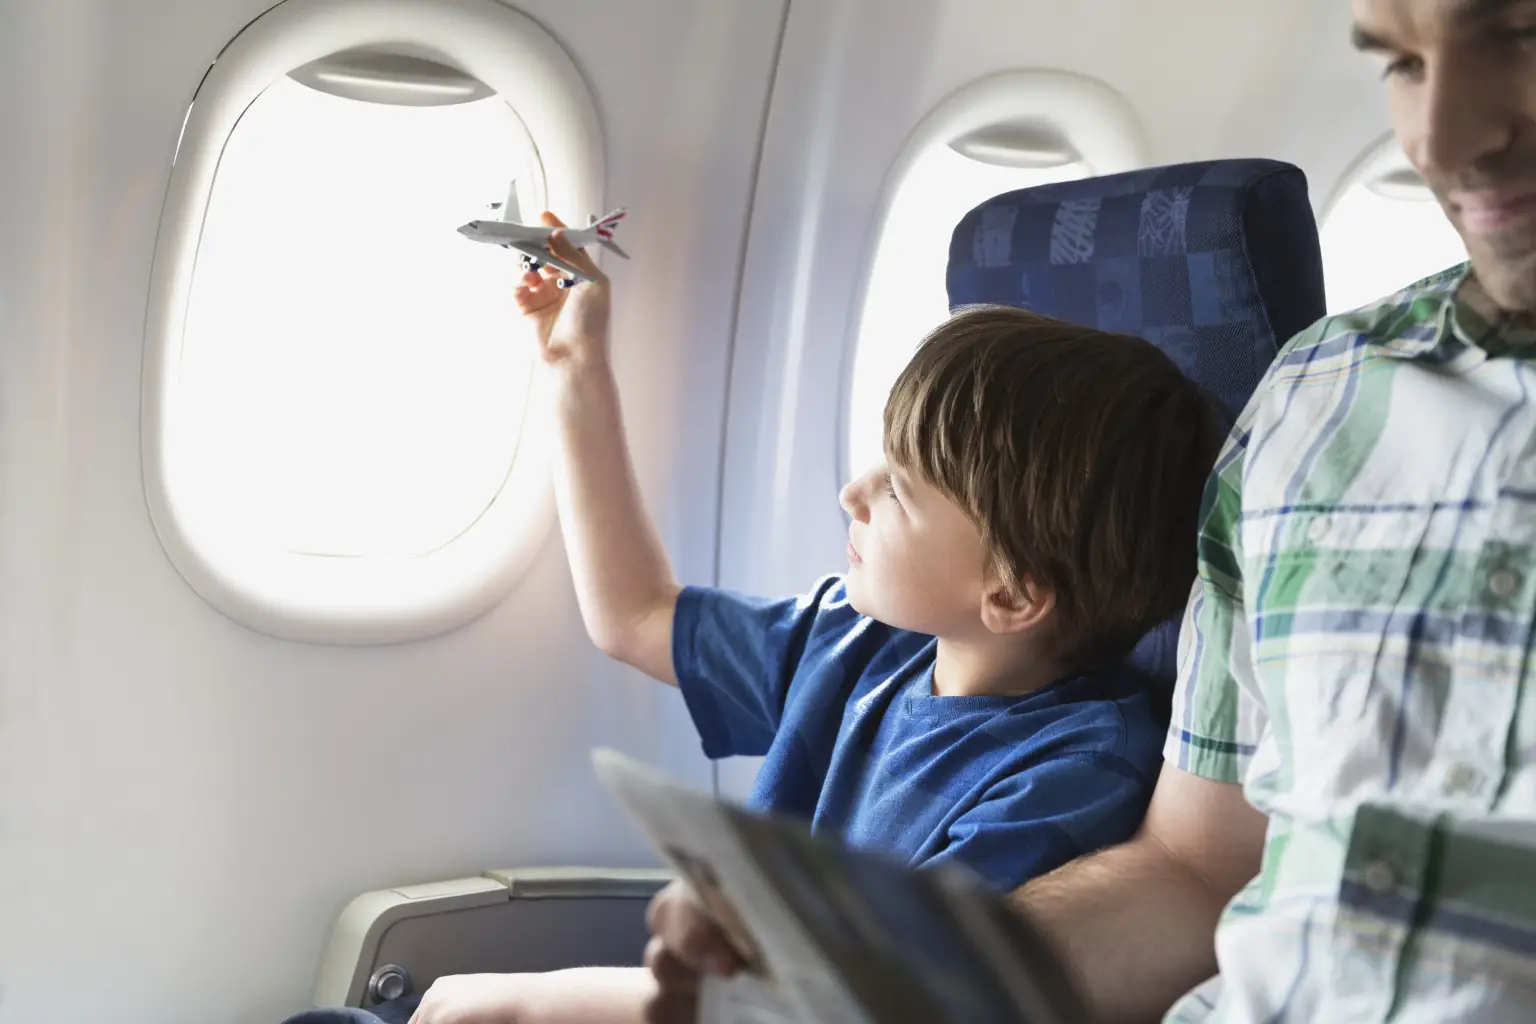 kids on a plane2